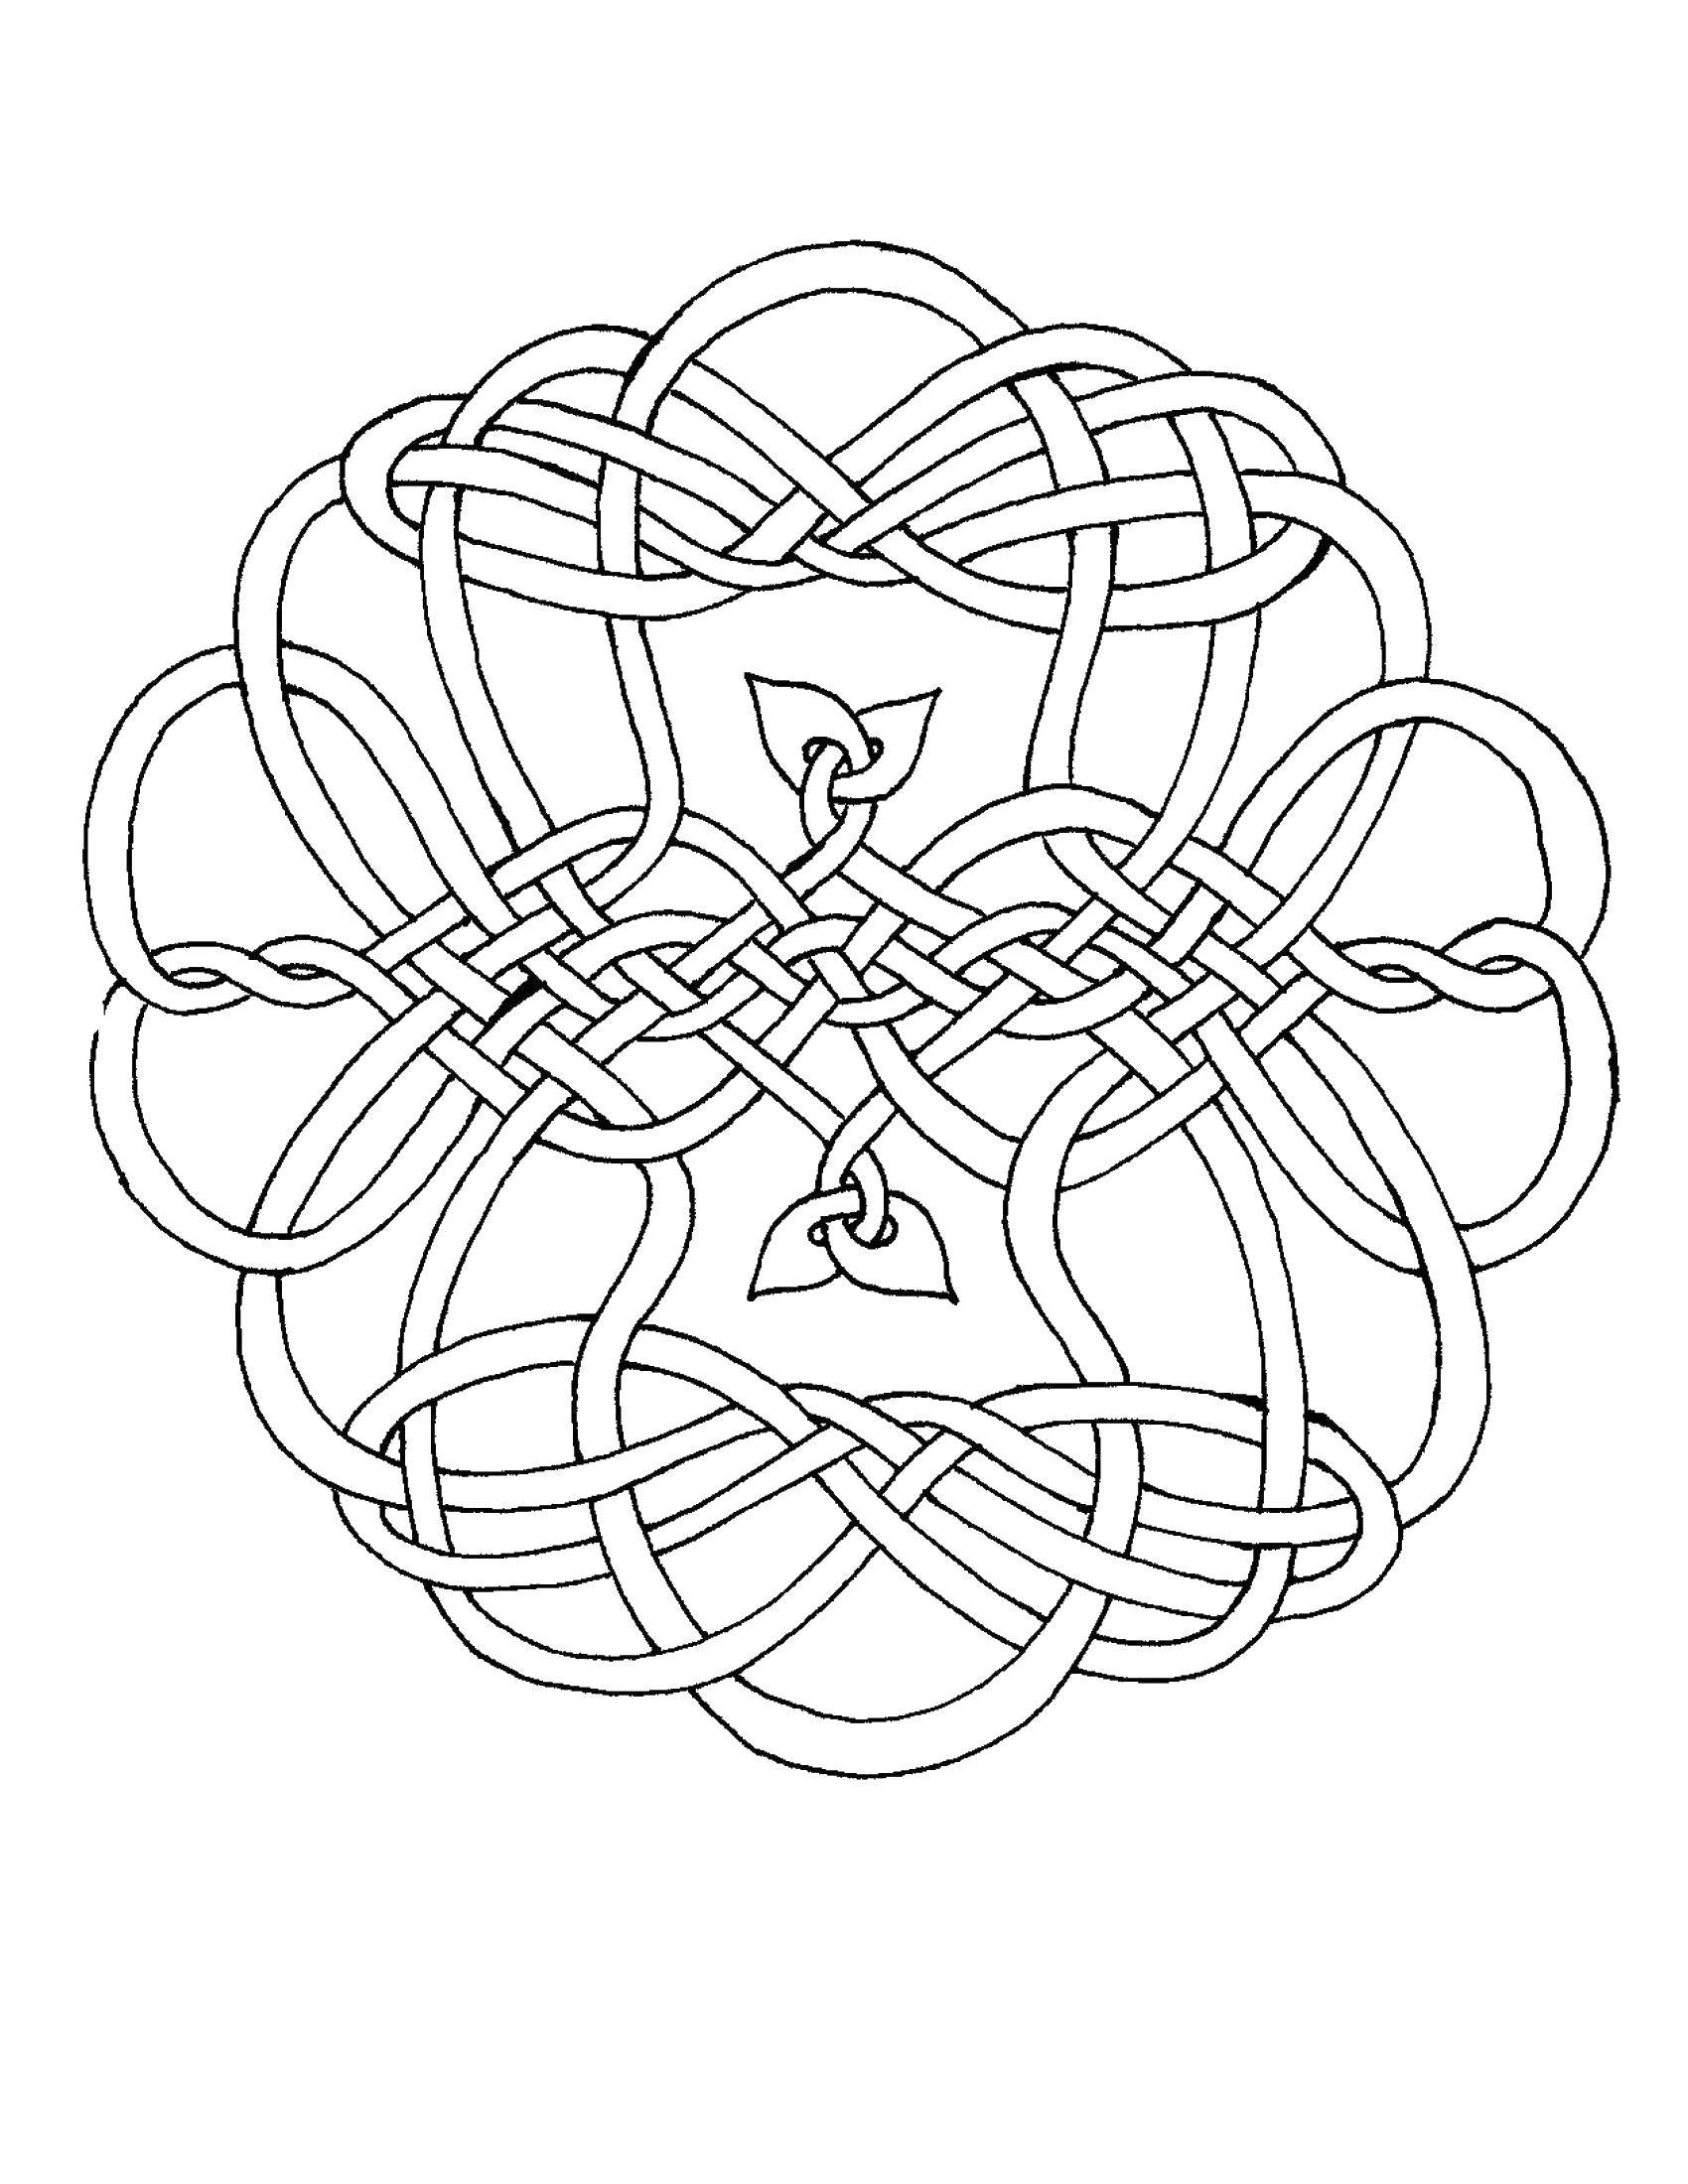 Coloring Mandala. Category coloring antistress. Tags:  mandala, antistress.